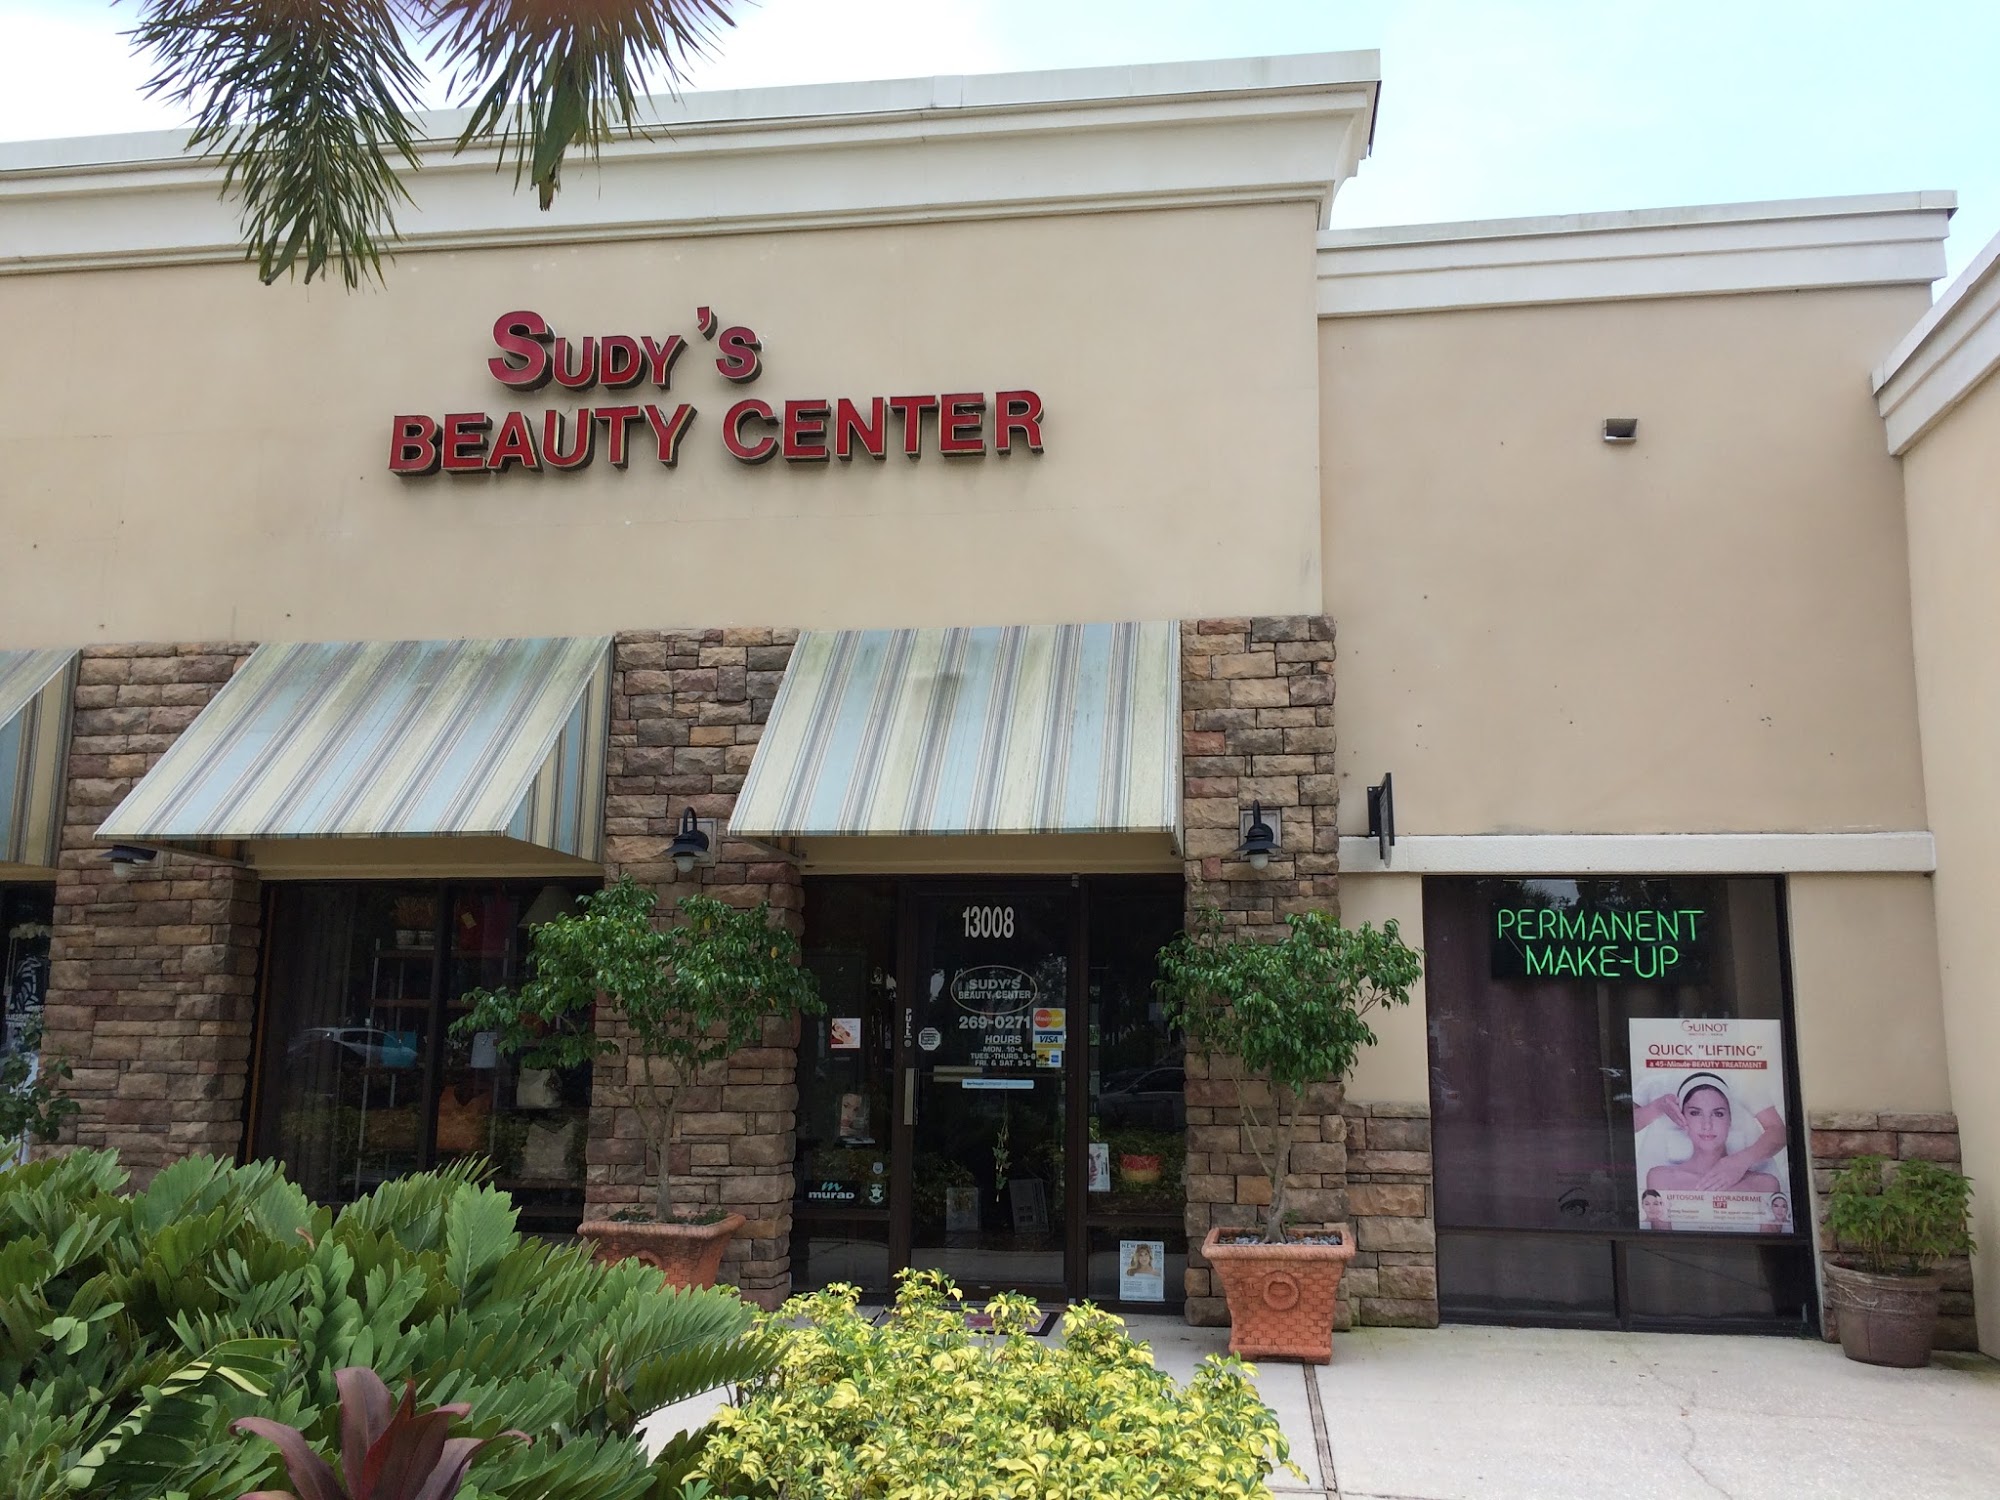 Sudy's Beauty Center